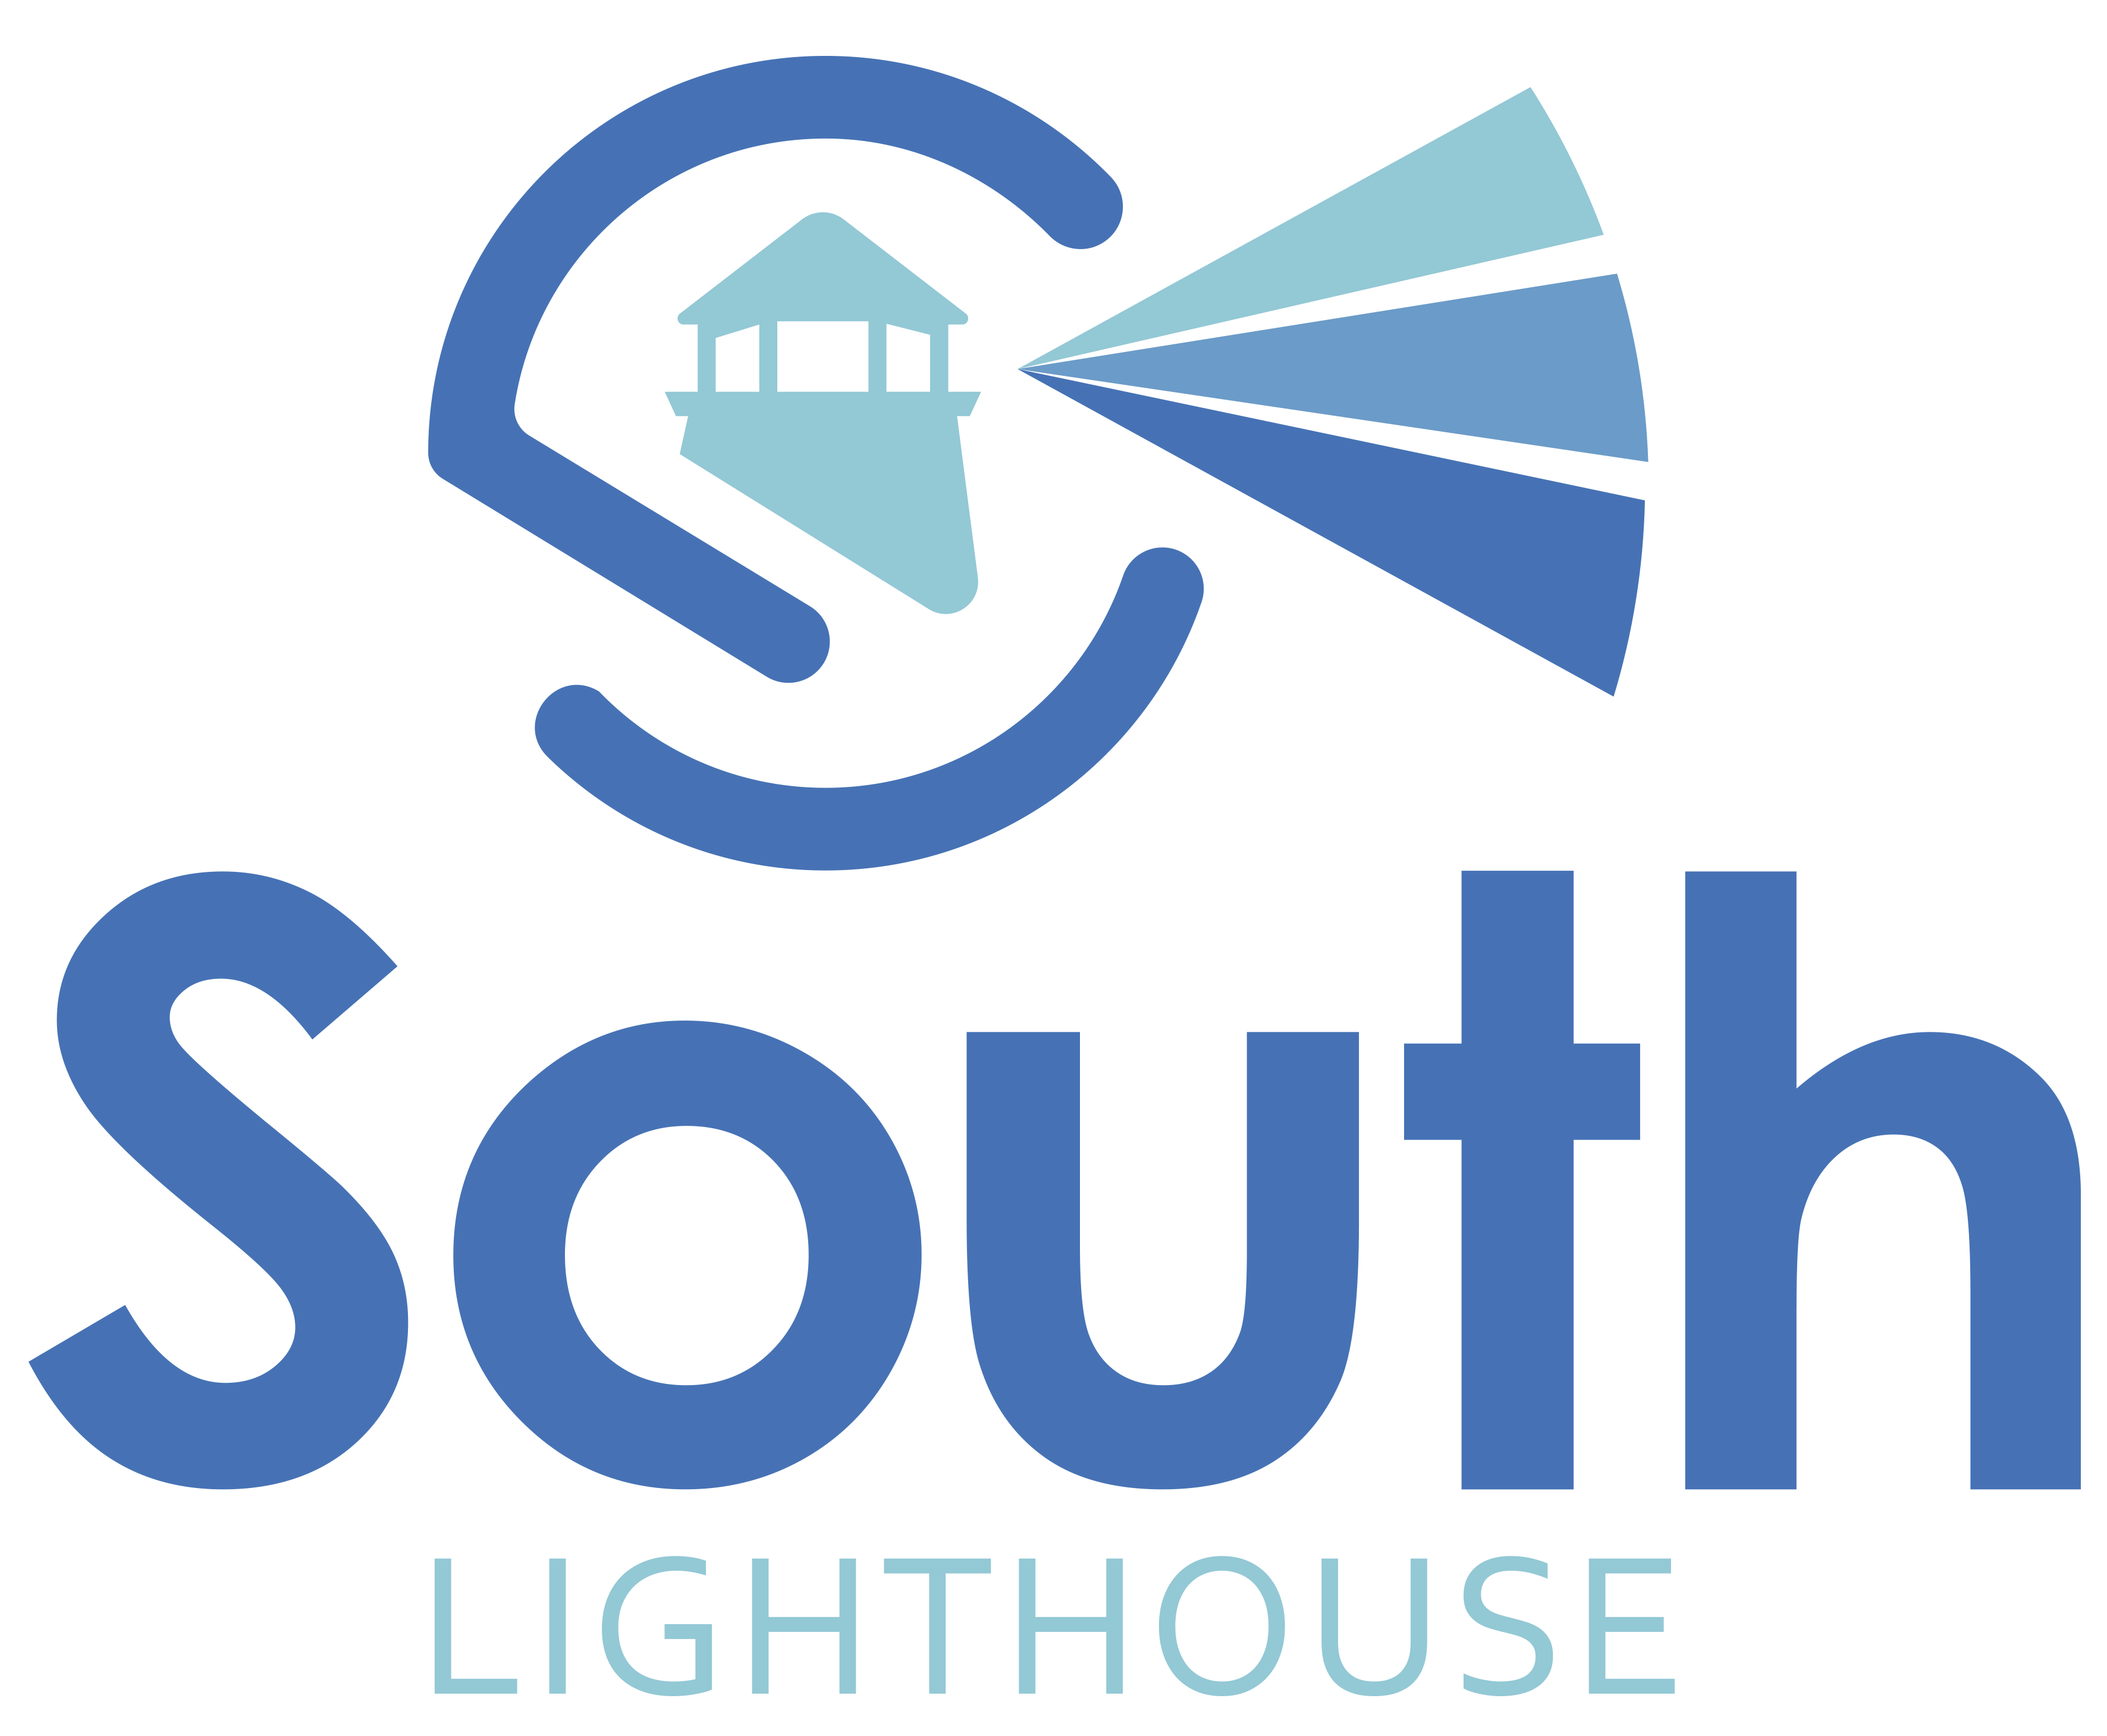 South Lighthouse